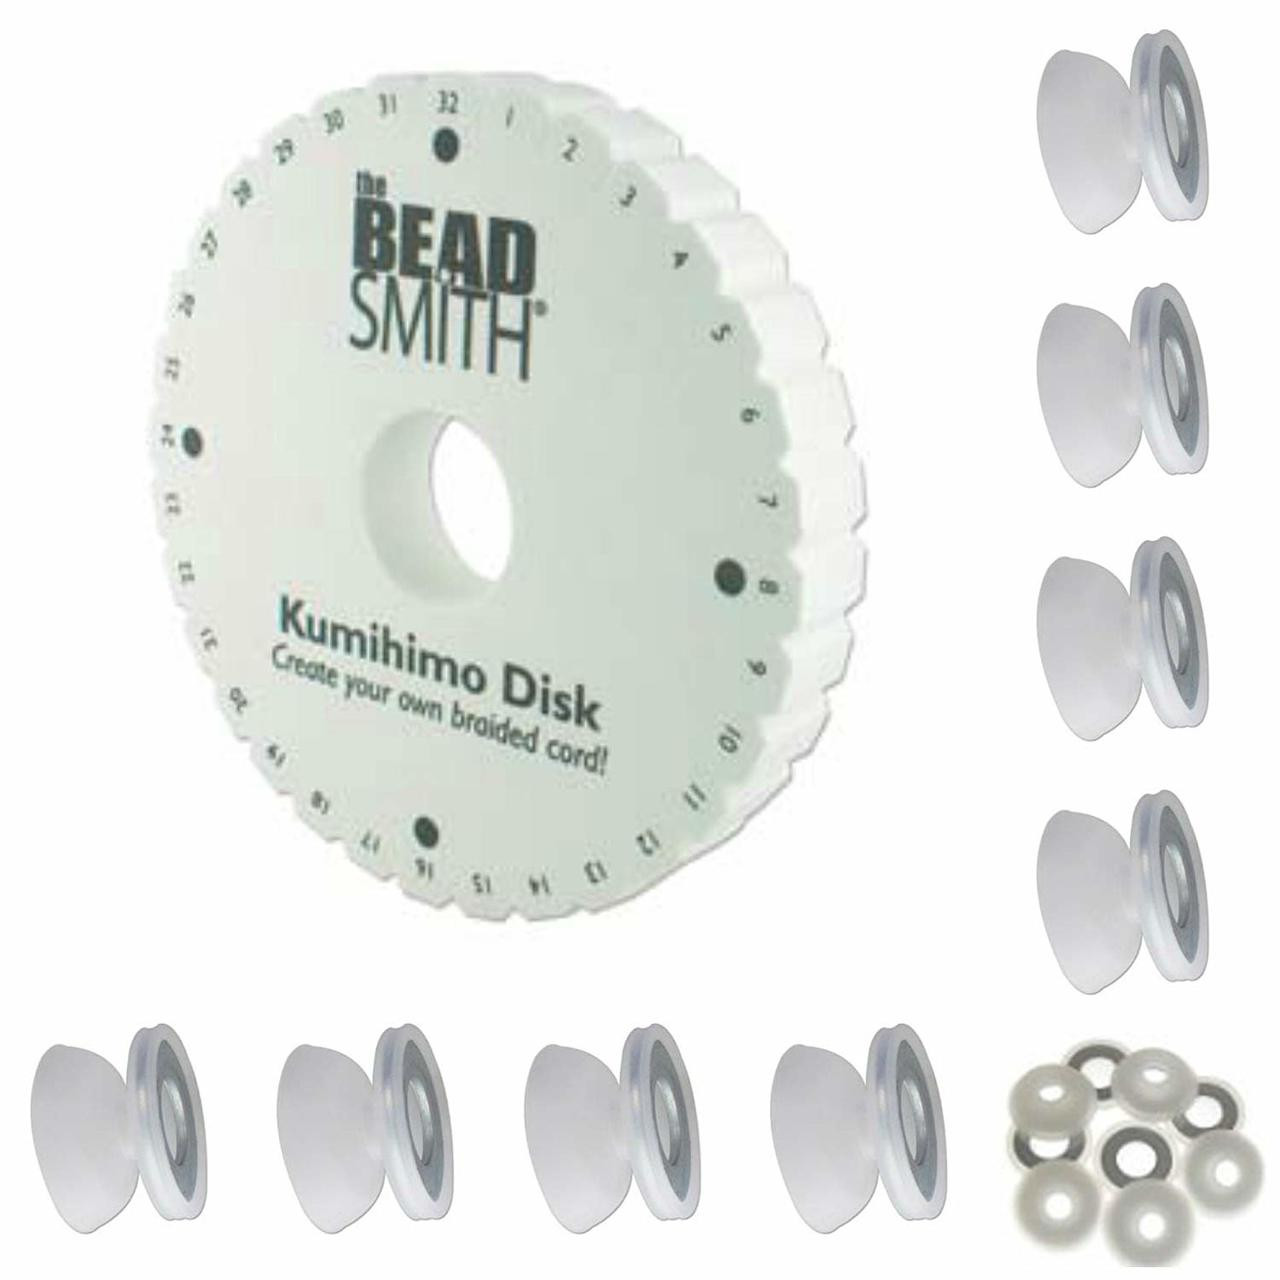 Kumihimo Weaving Disk Plus 8 Weighted Bobbins. - KnittingHelp.com Shop